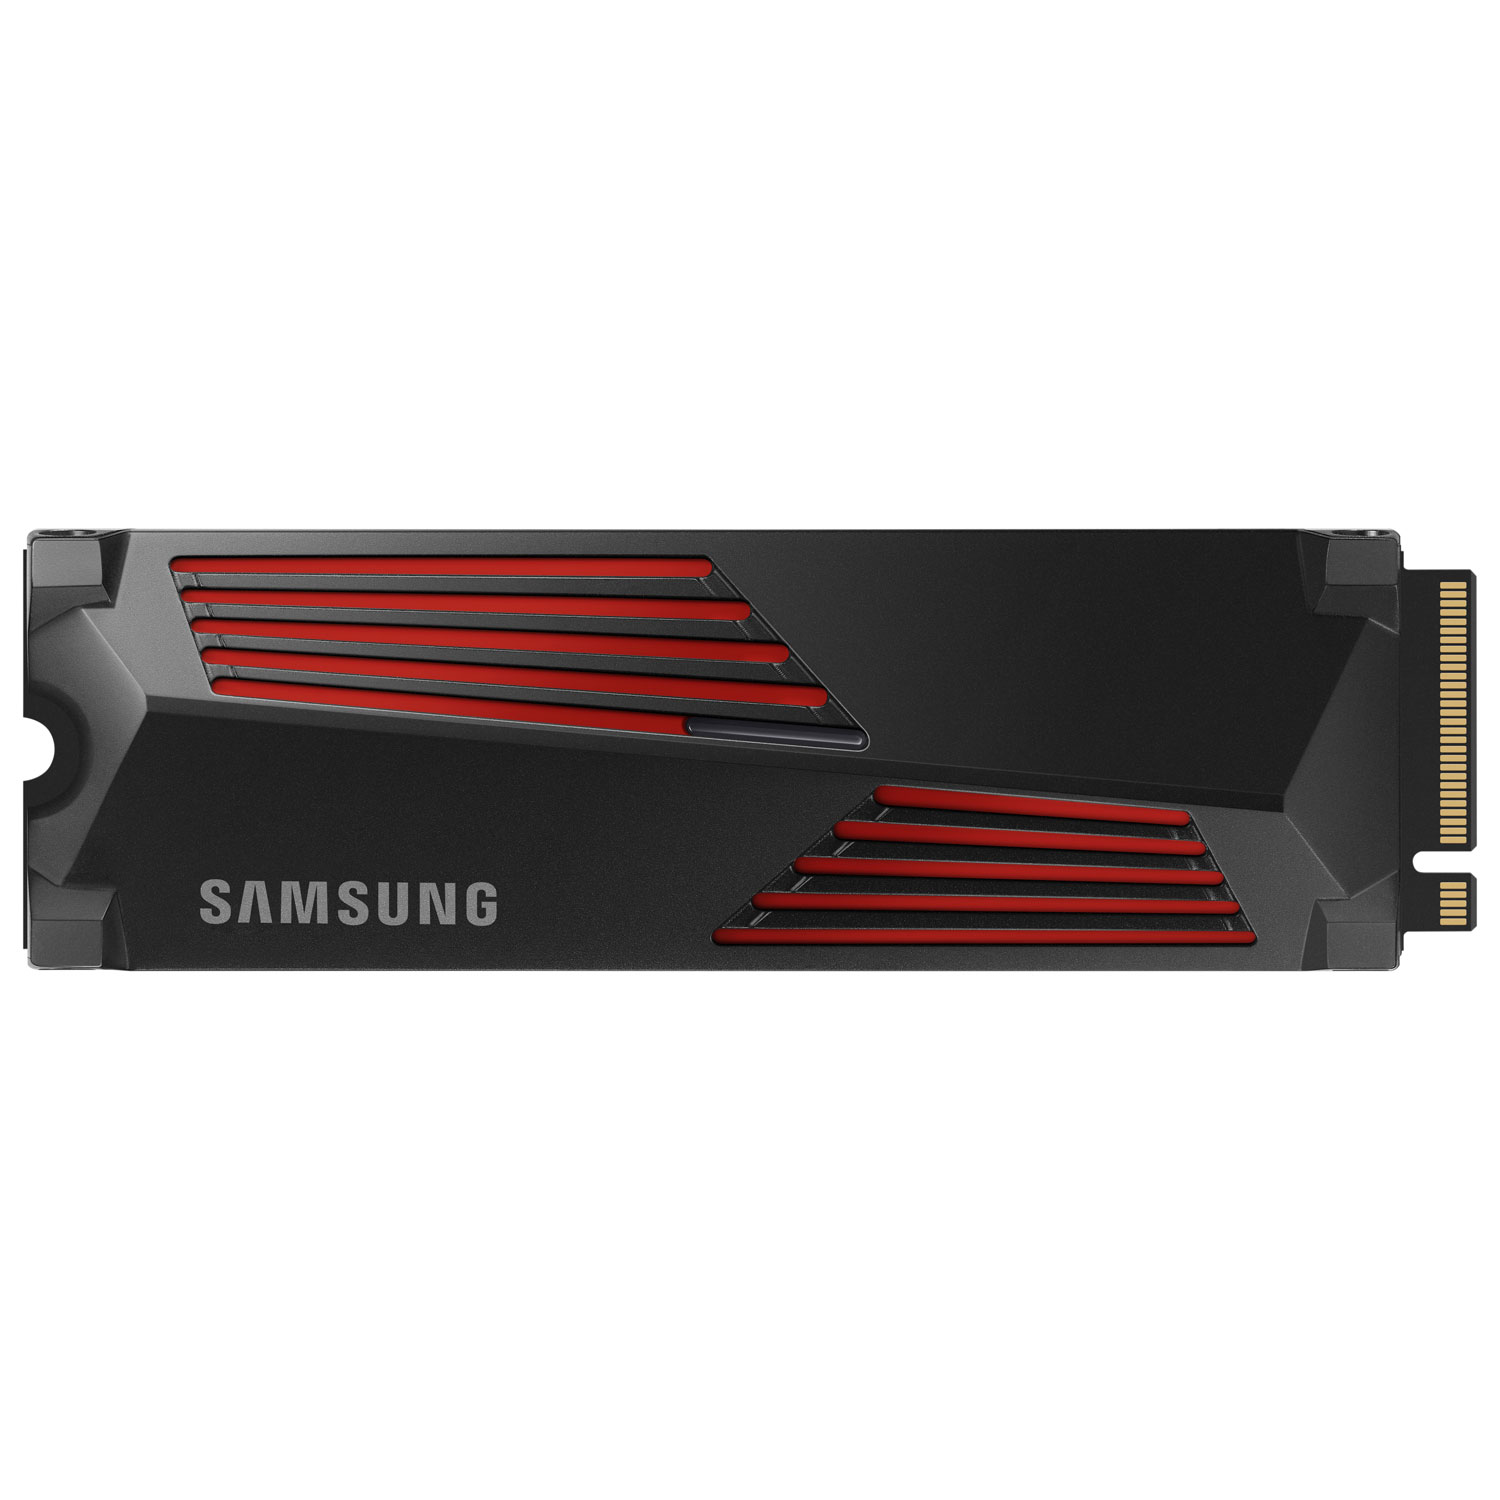 Samsung 990PRO 1TB NVMe PCI-e Internal Solid State Drive with Heatsink (MZ-V9P1T0CW) - Black/Red